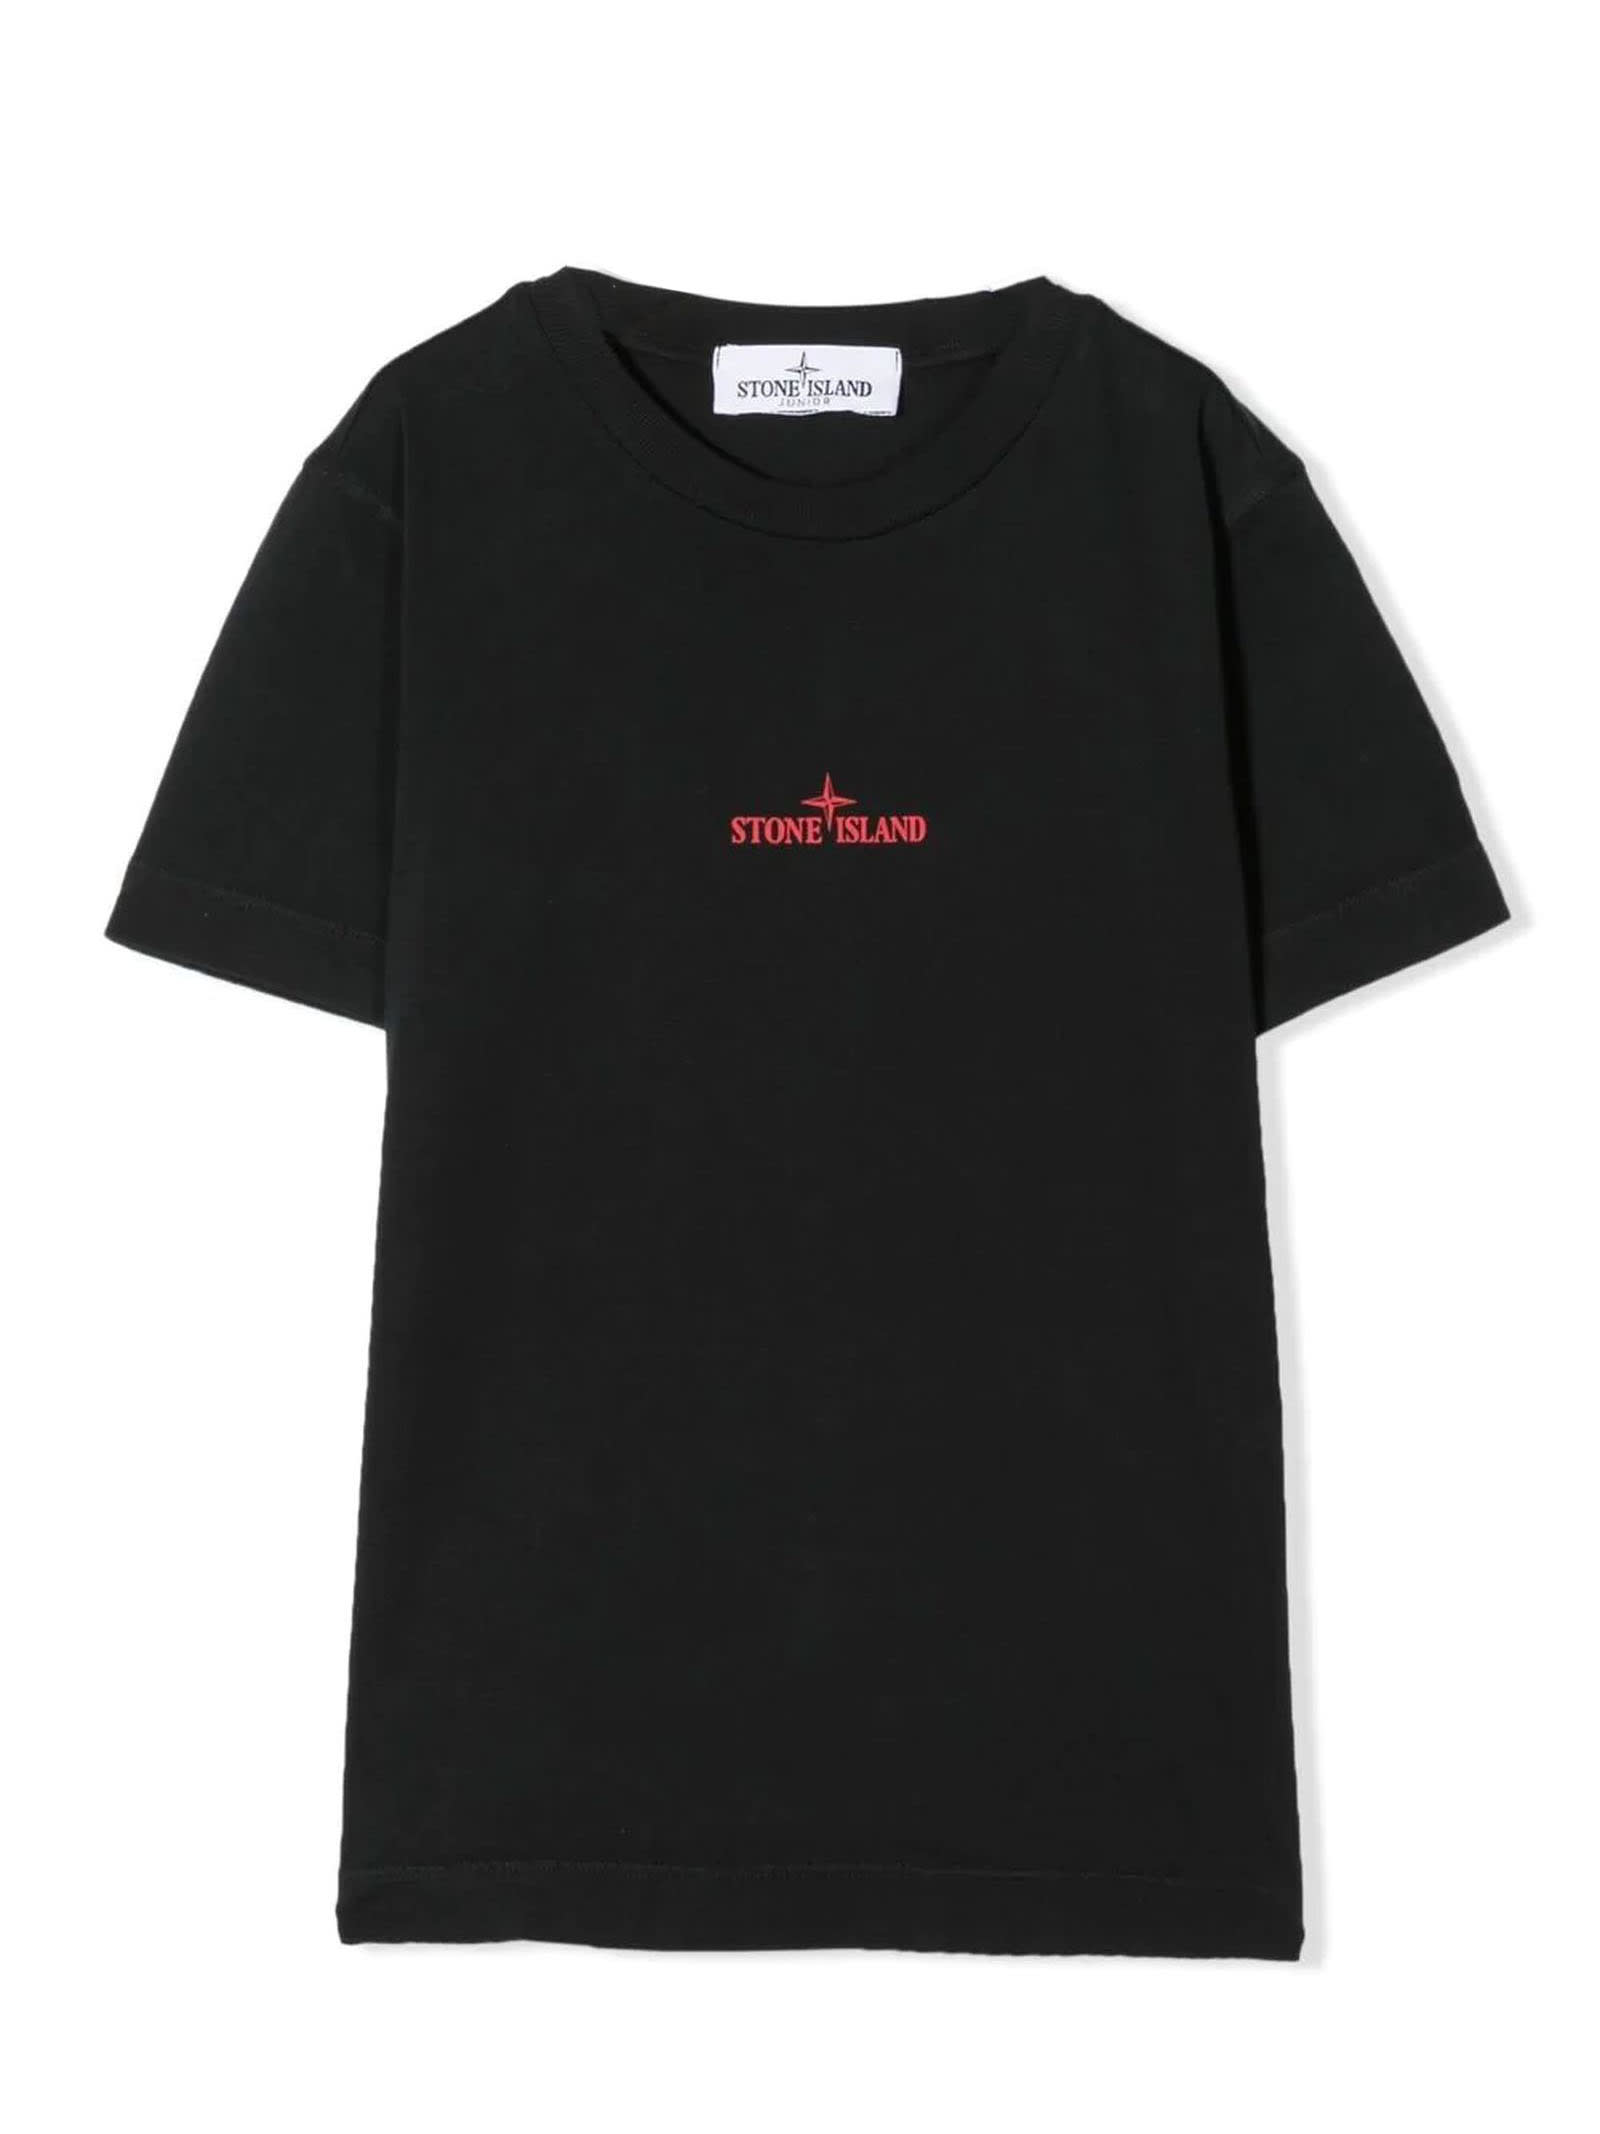 Stone Island Black Cotton T-shirt